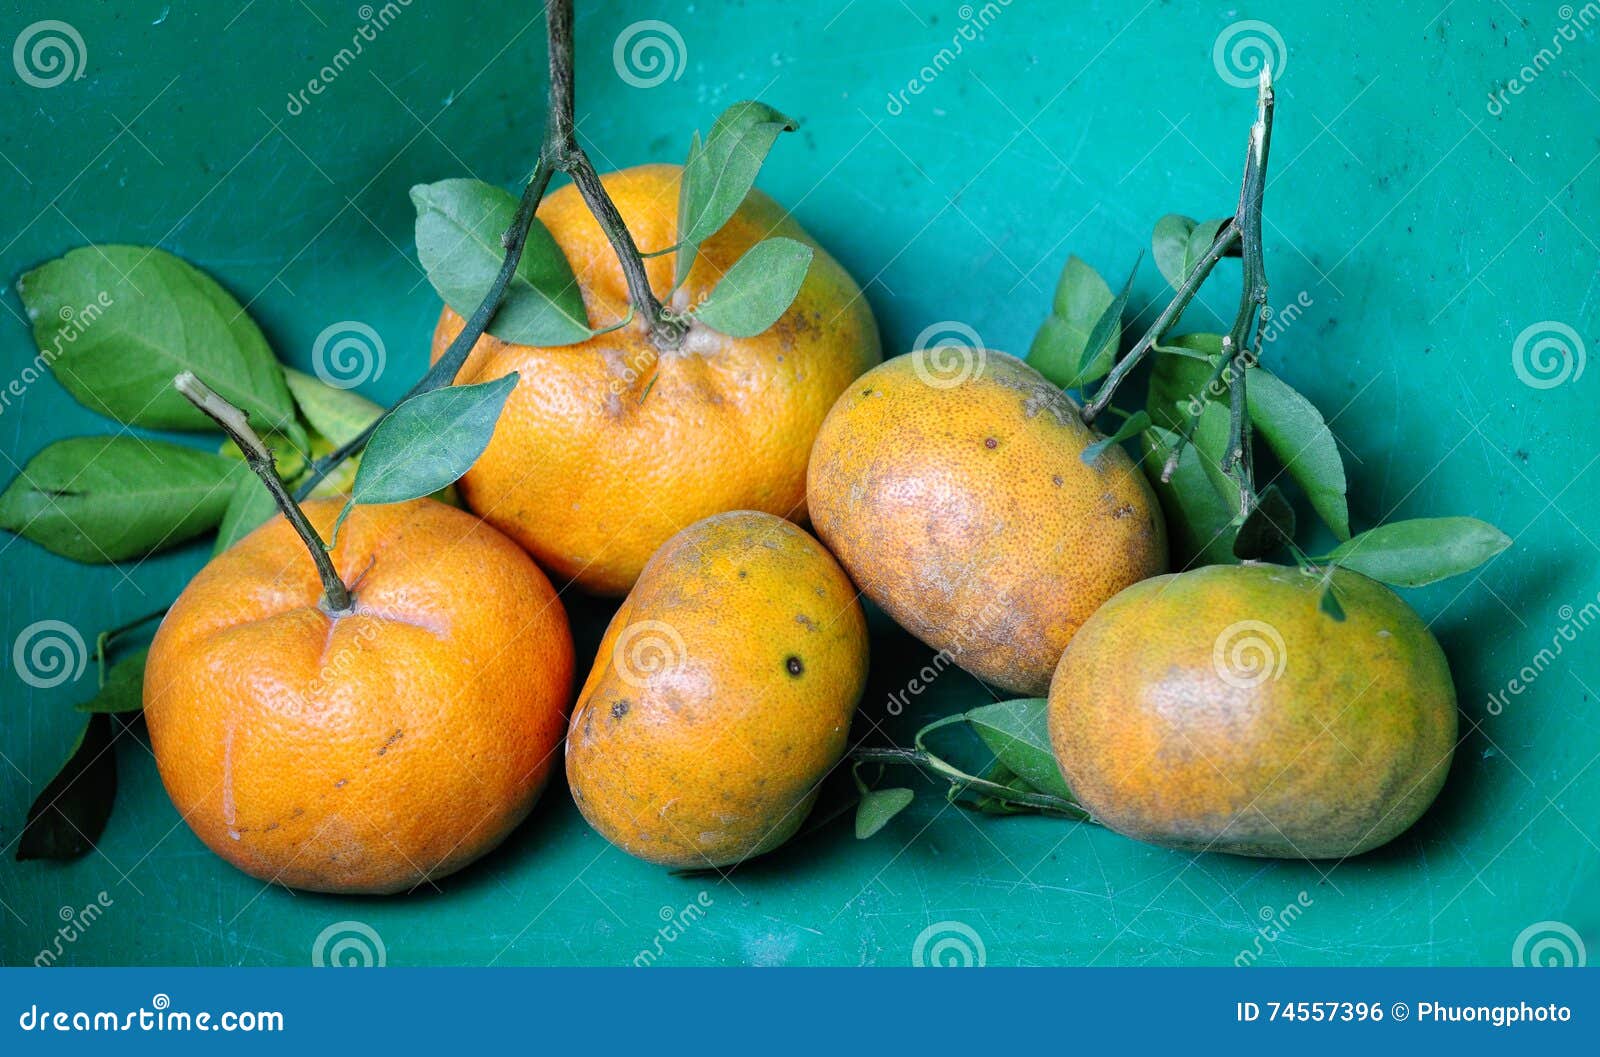 Mandarin Fruits At The Basket Stock Photo Image Of Organic Fruits